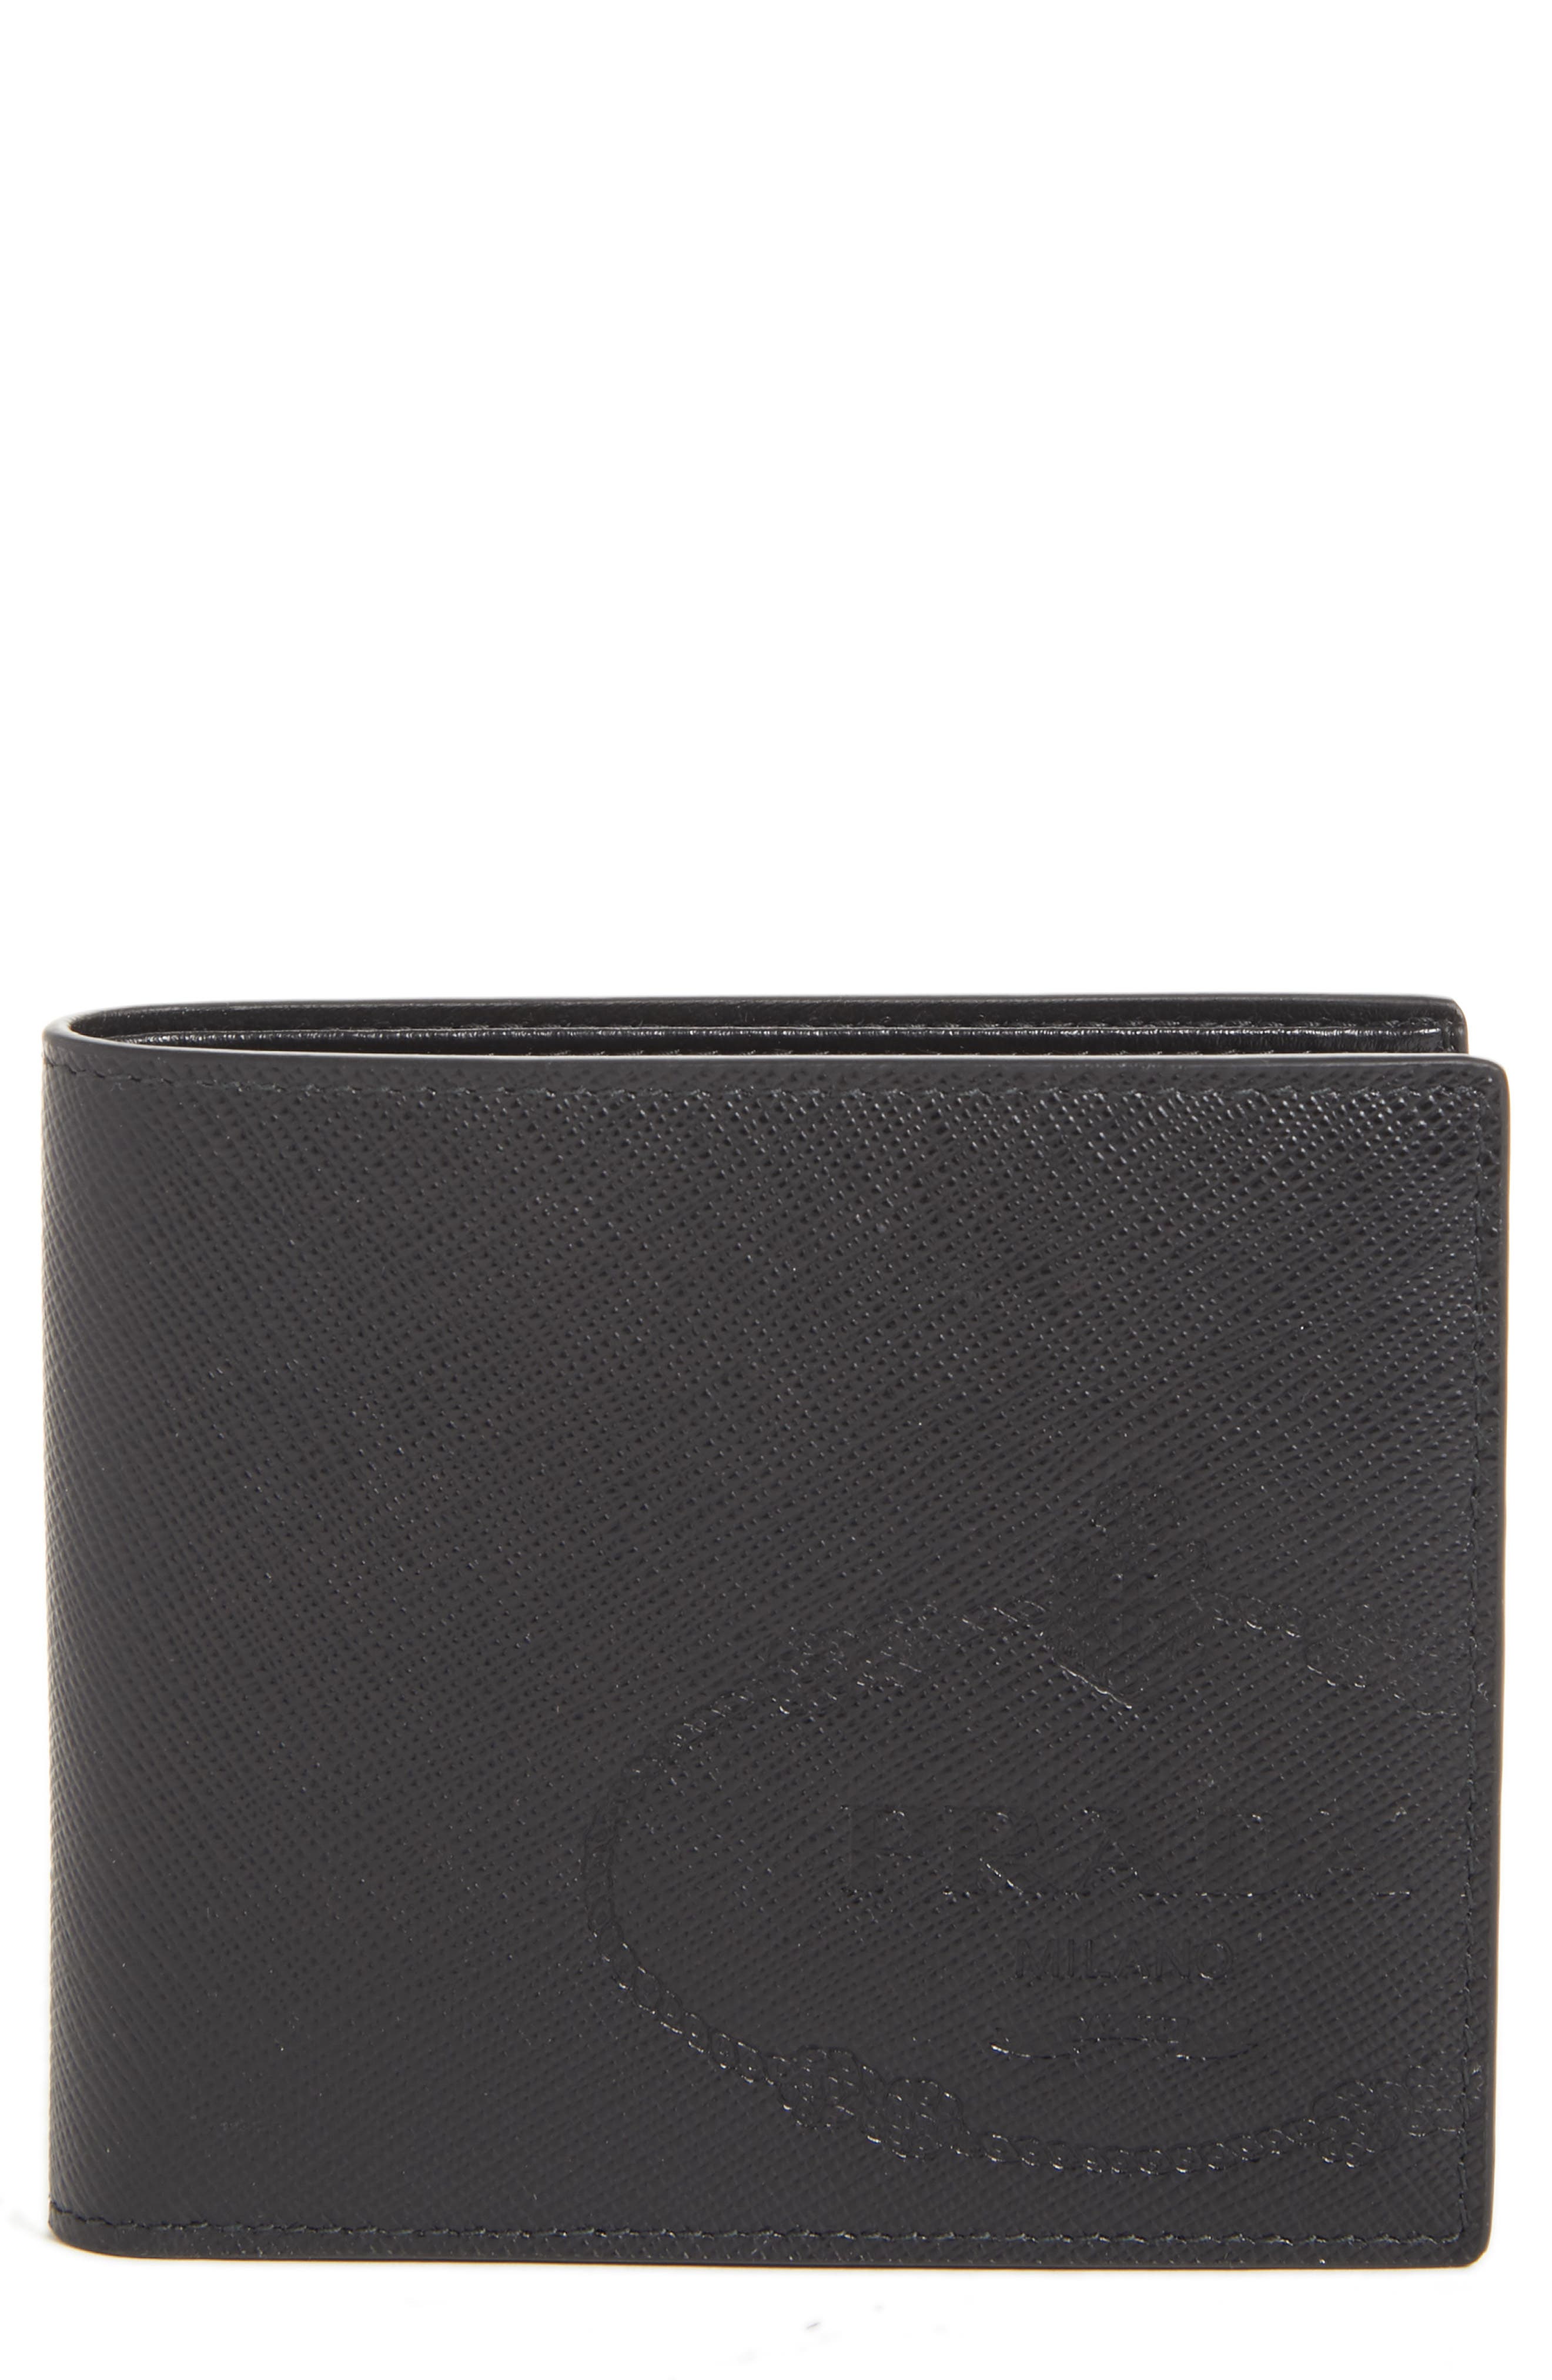 prada saffiano leather billfold wallet